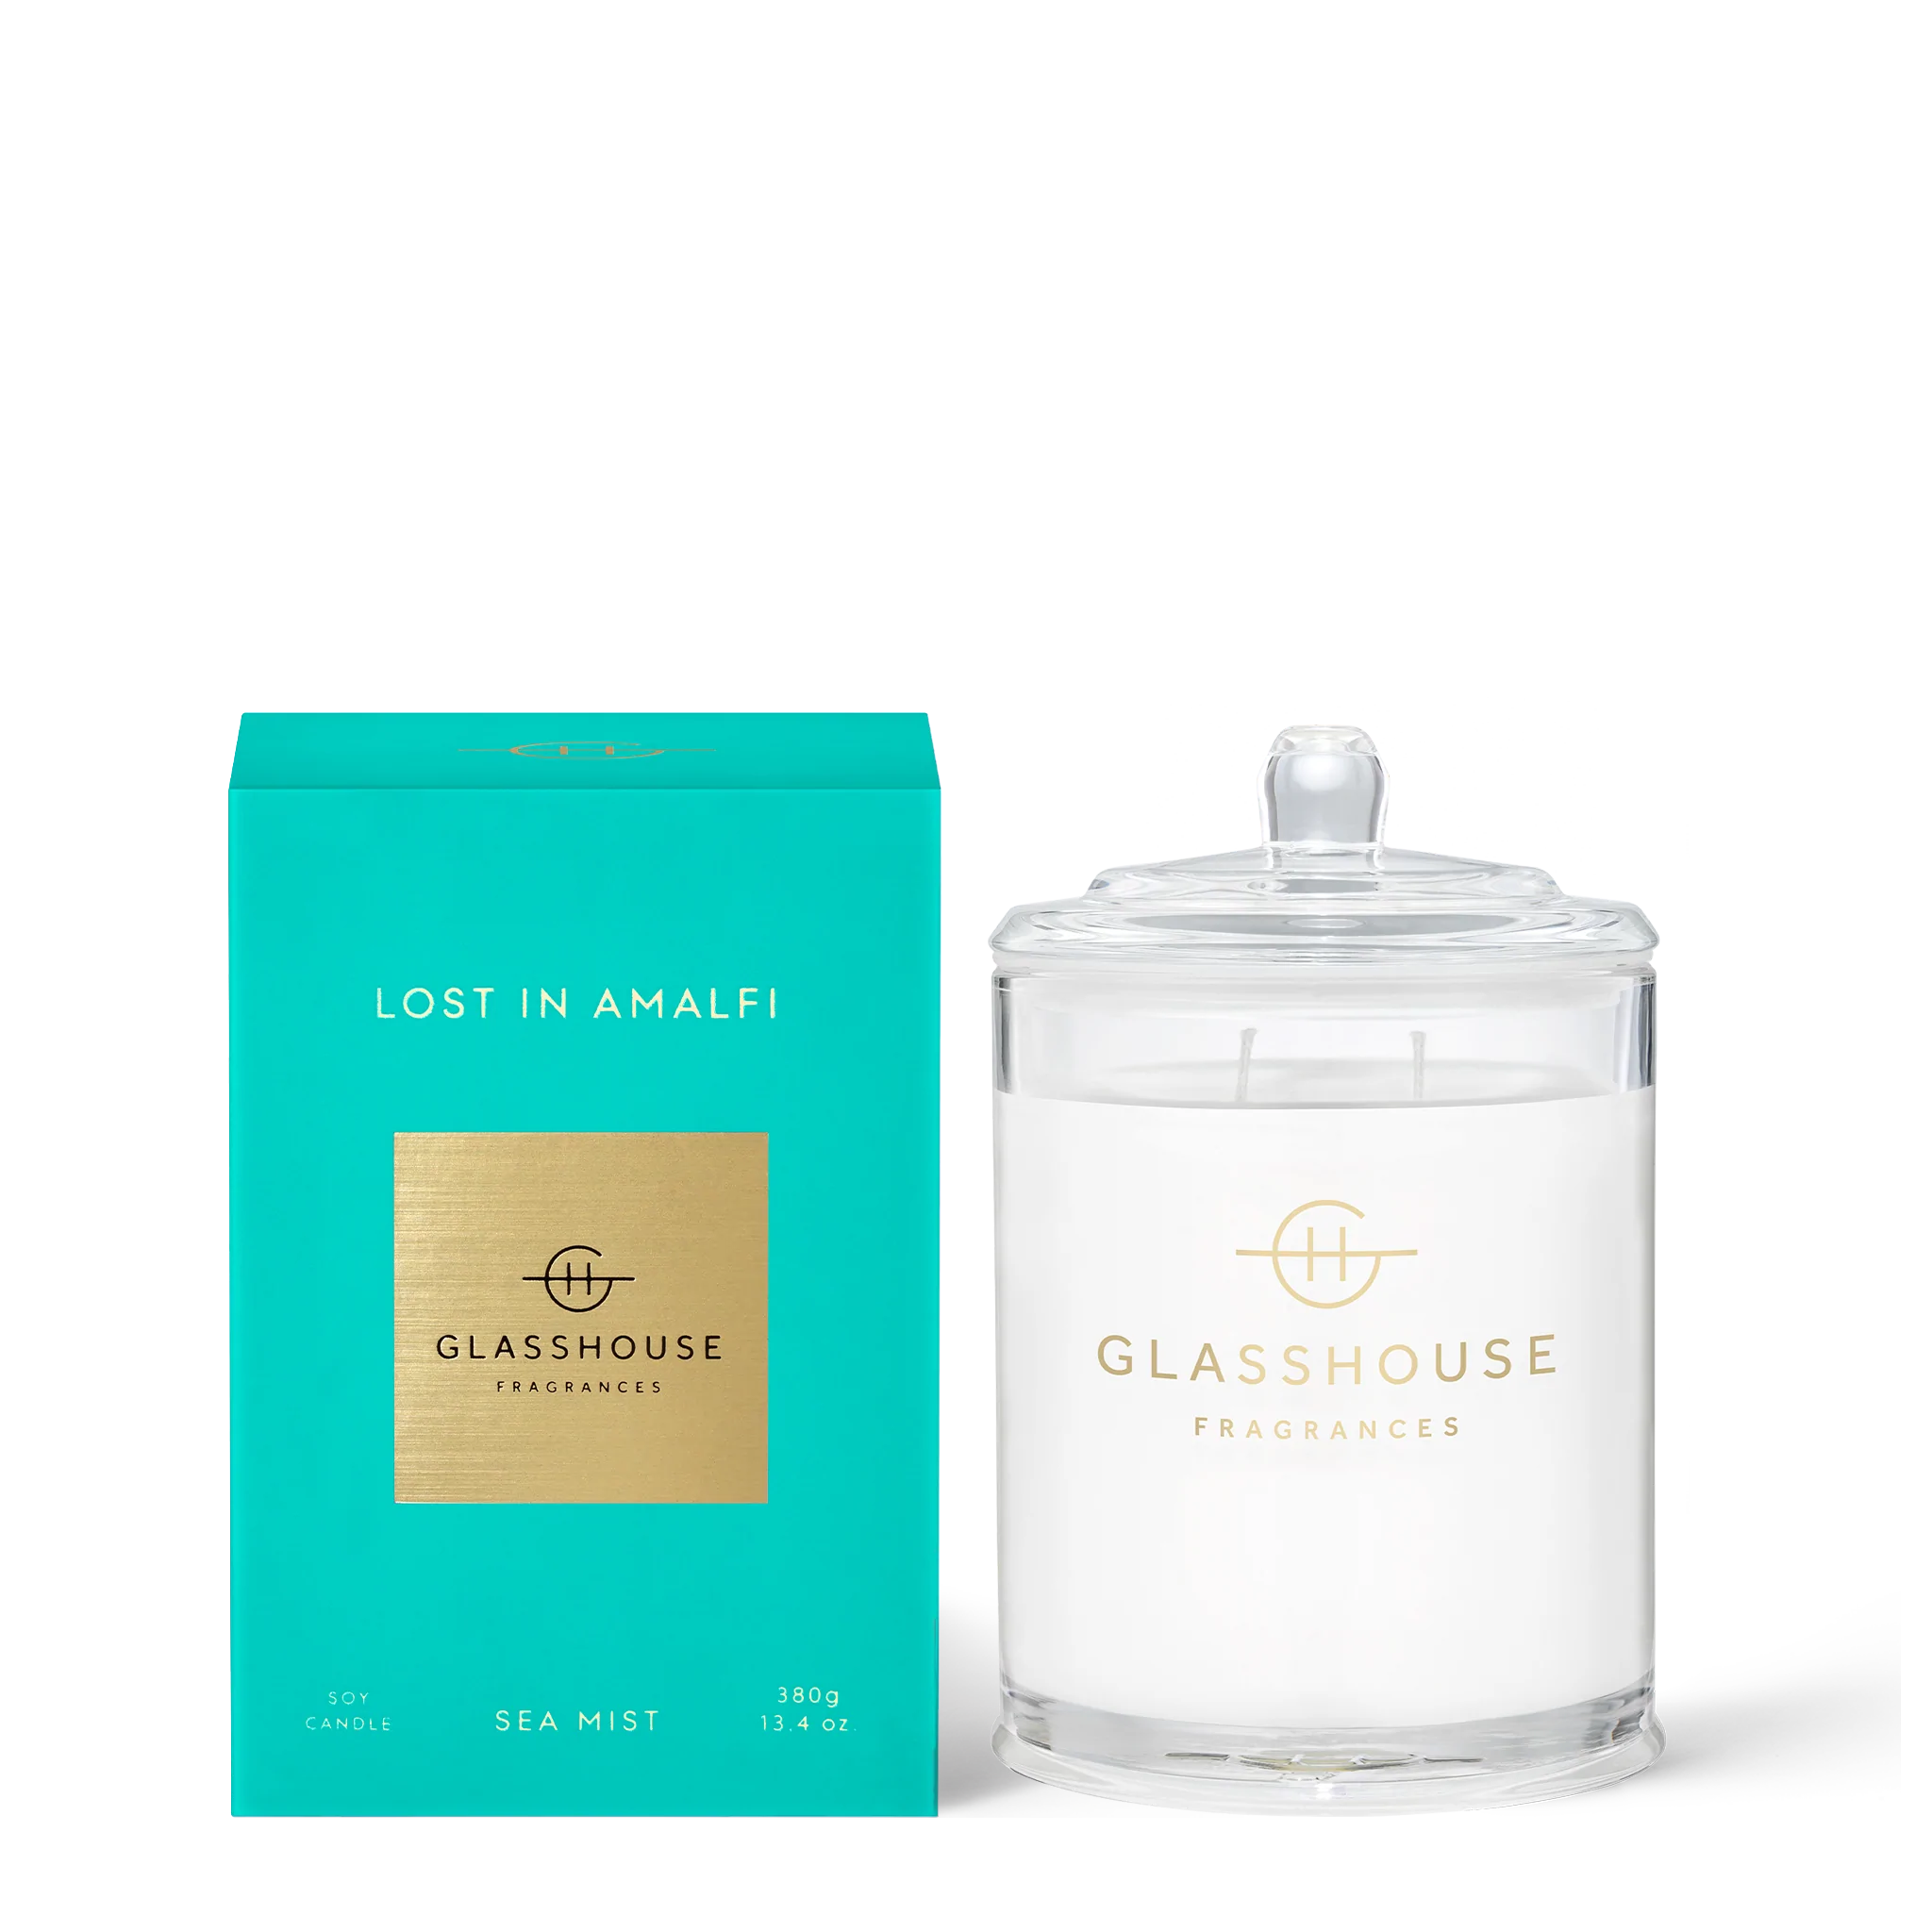 Glasshouse Fragrances13.4oz  Candle -LOST IN AMALFI